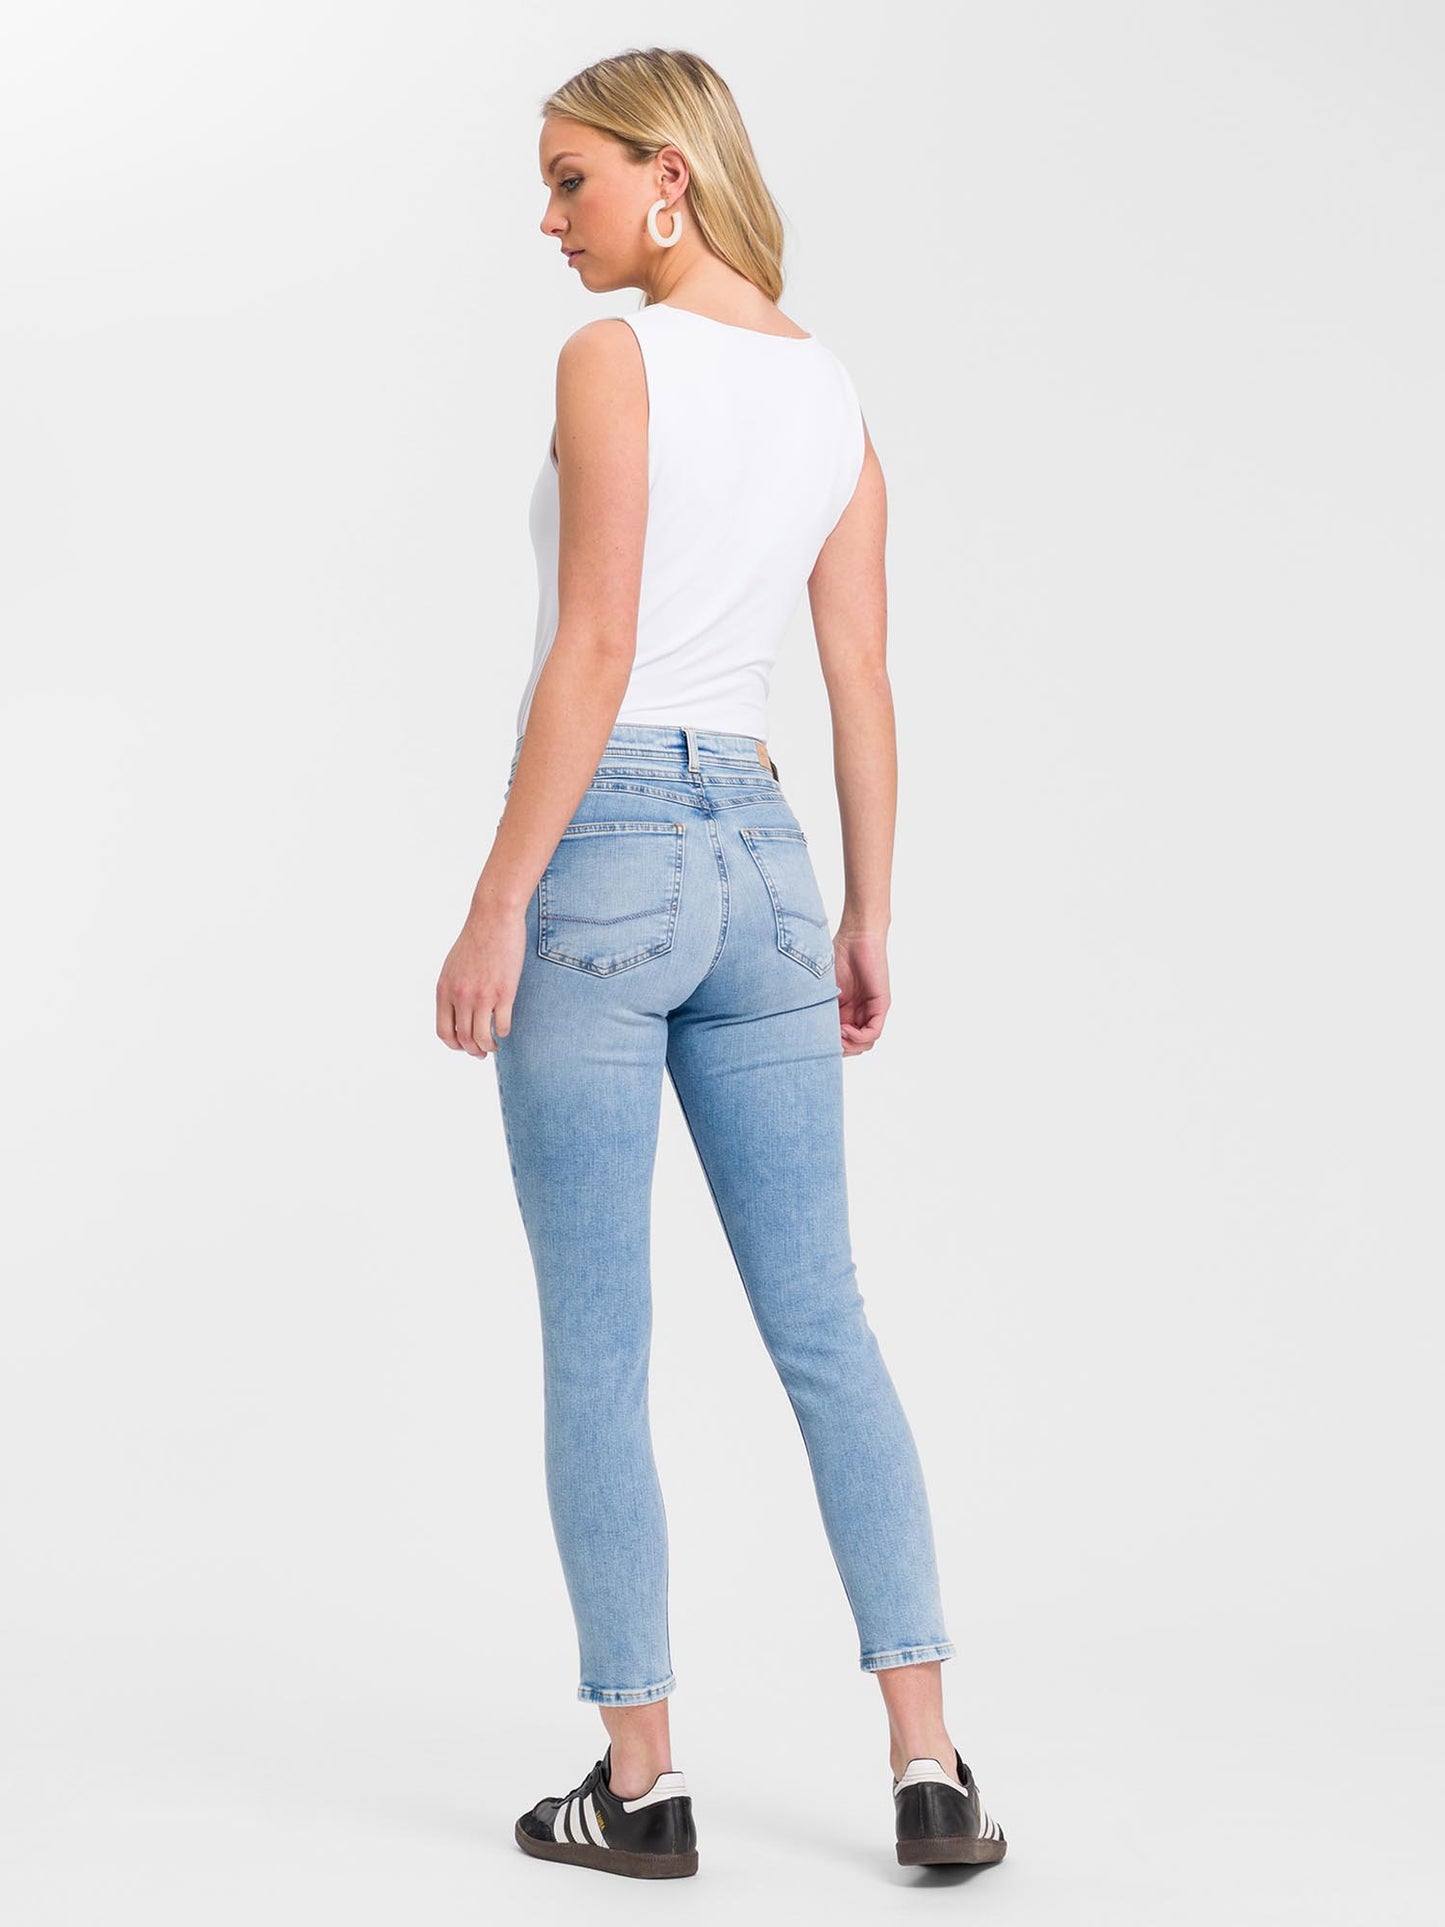 Judy Damen Jeans Super Skinny Fit High Waist Ankle Lenght hellblau